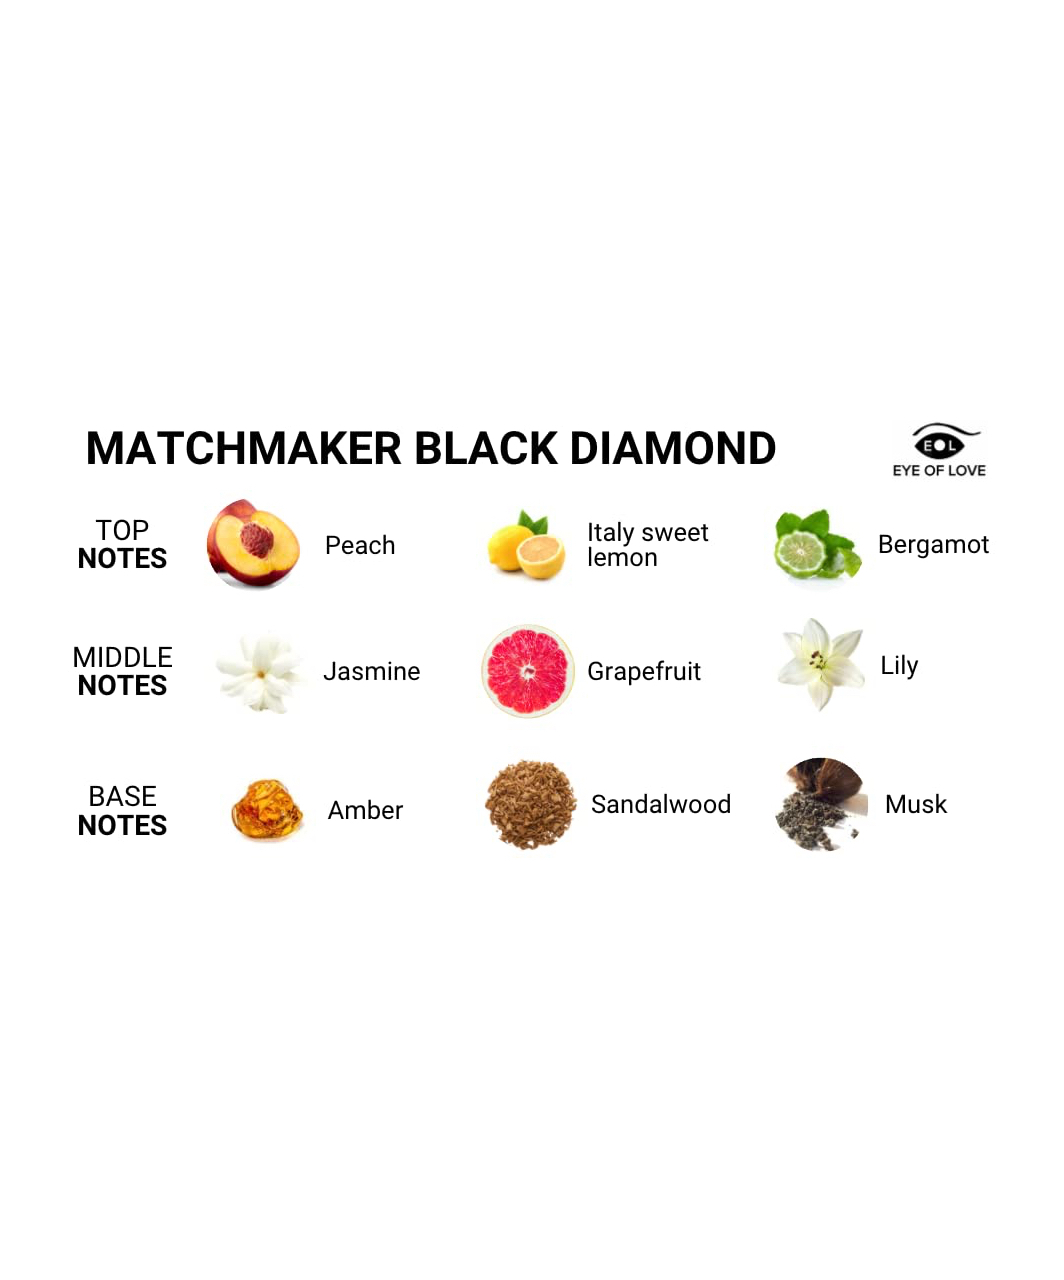 Eye Of Love x Matchmaker Black Diamond Pheromone Parfum To Attract Him (10 / 30 ml)